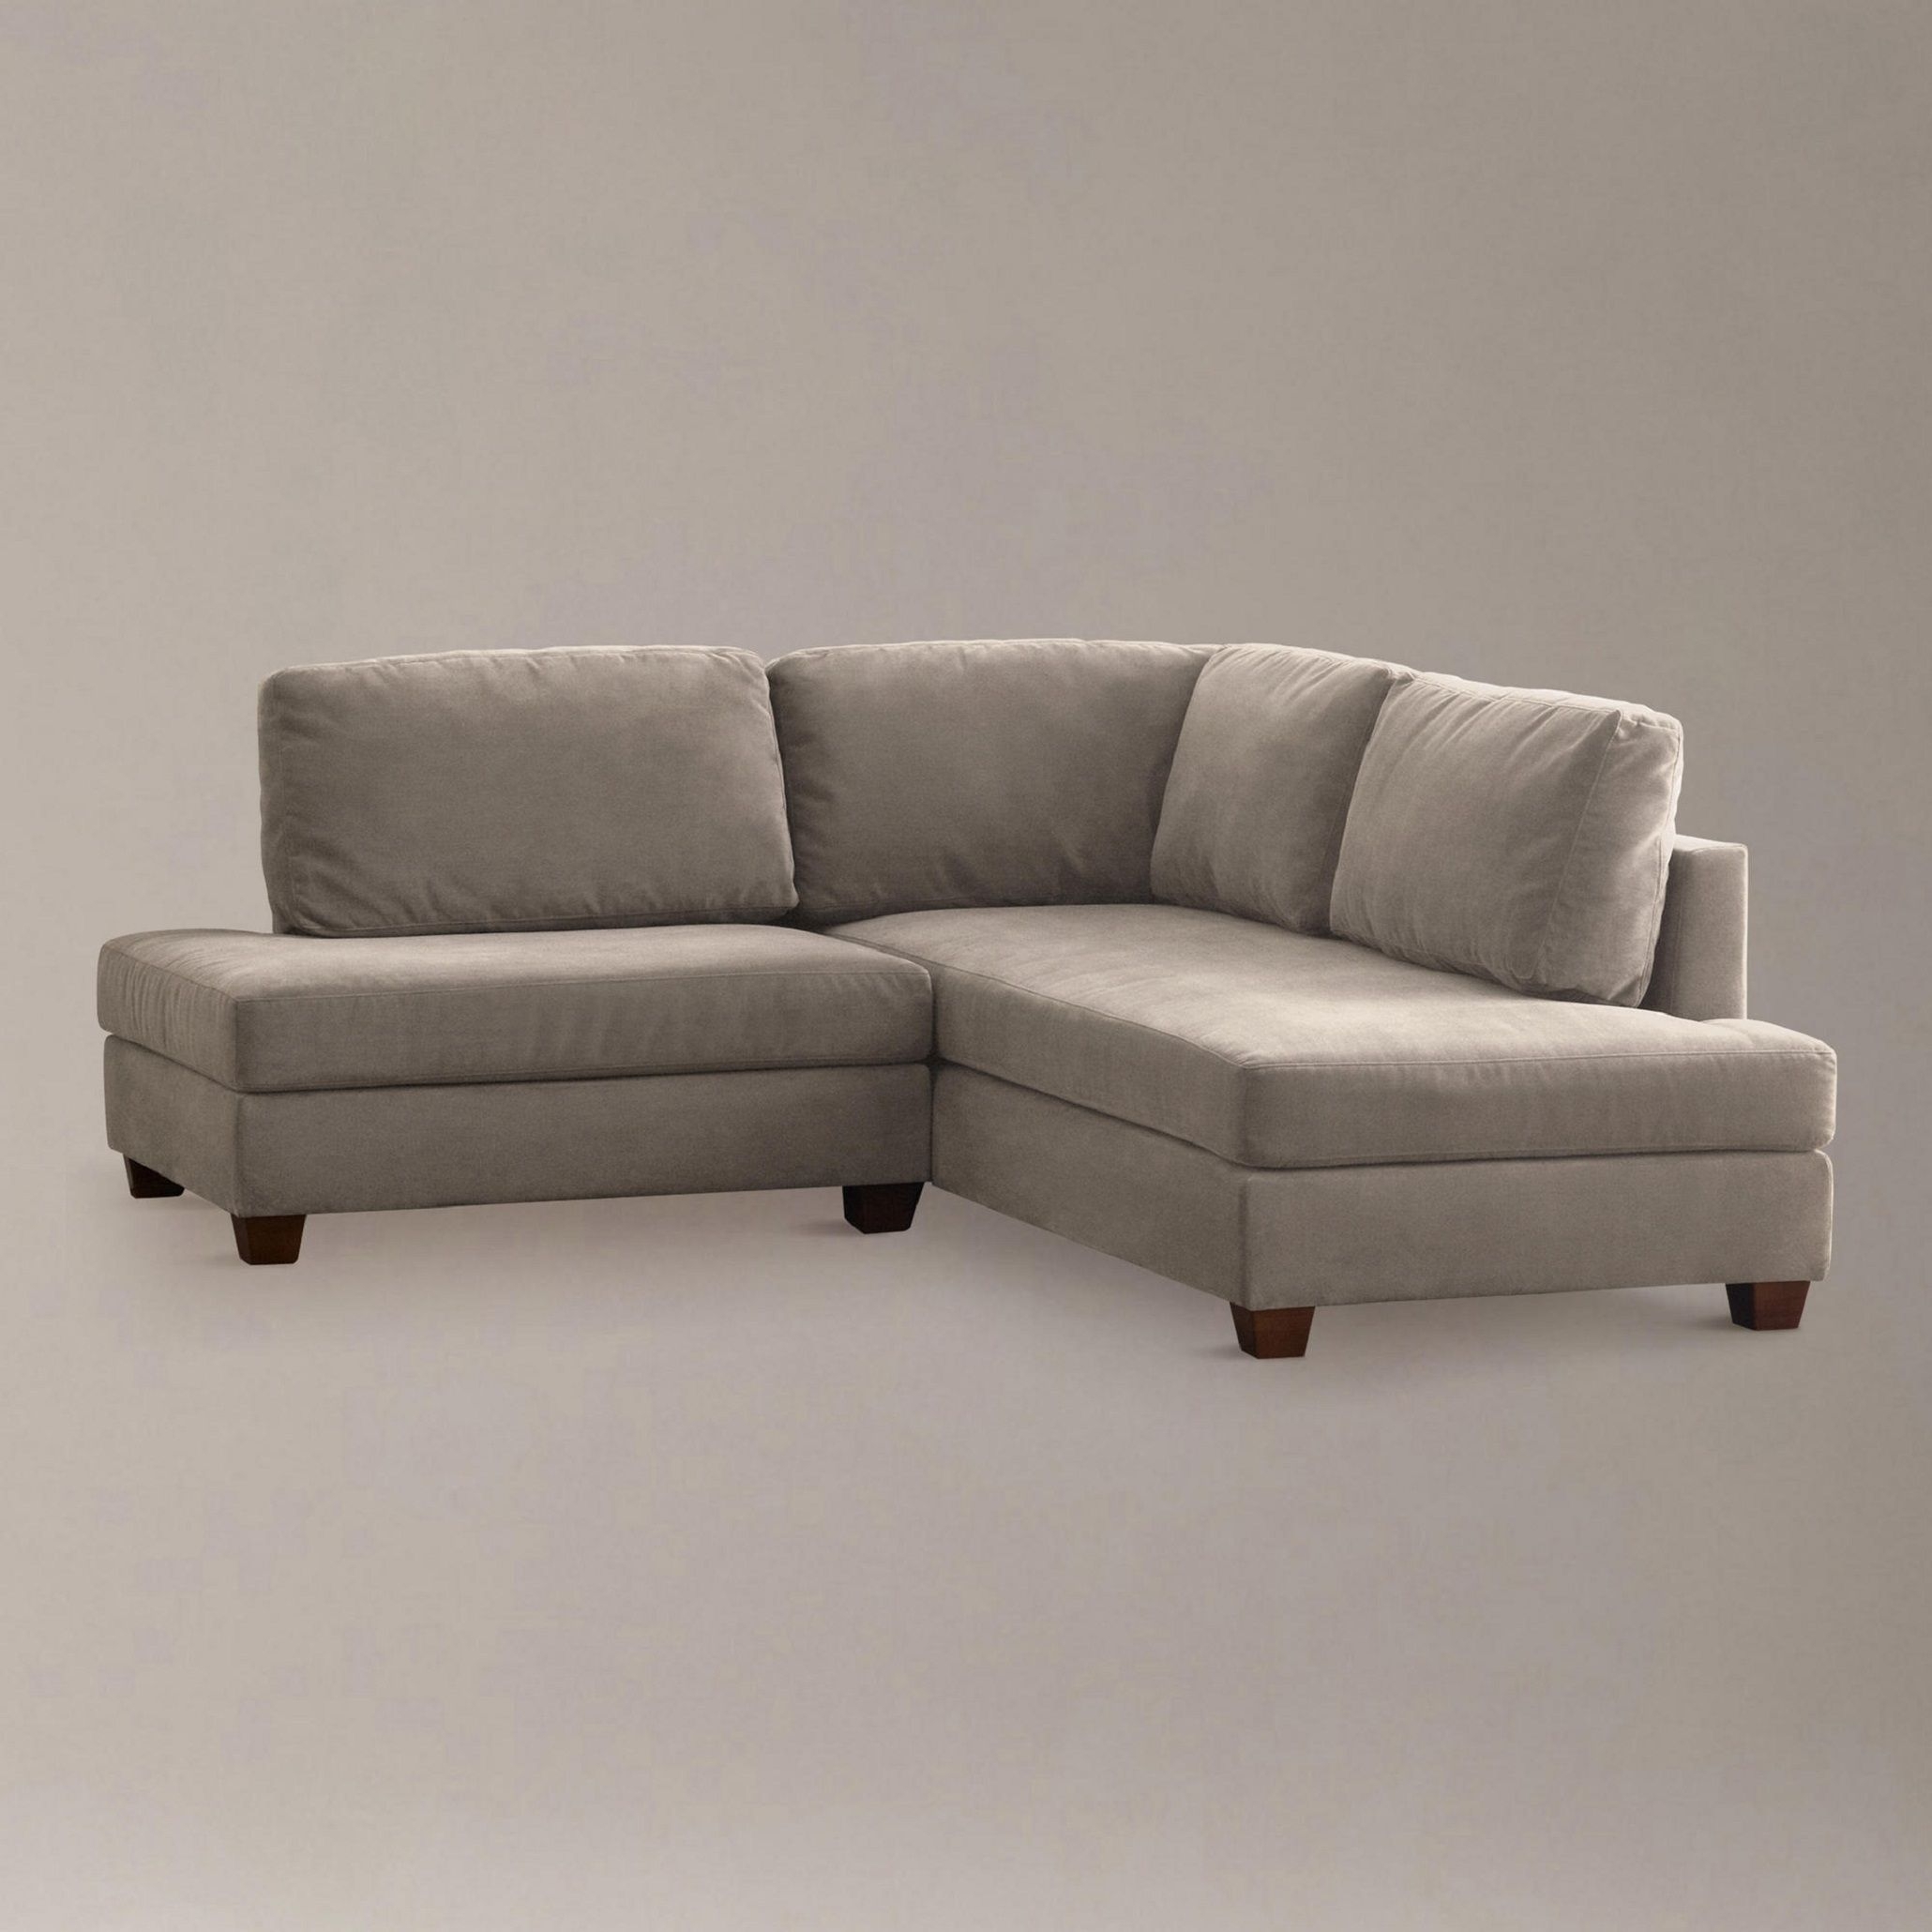 small sectional sofa sleeper ideas on